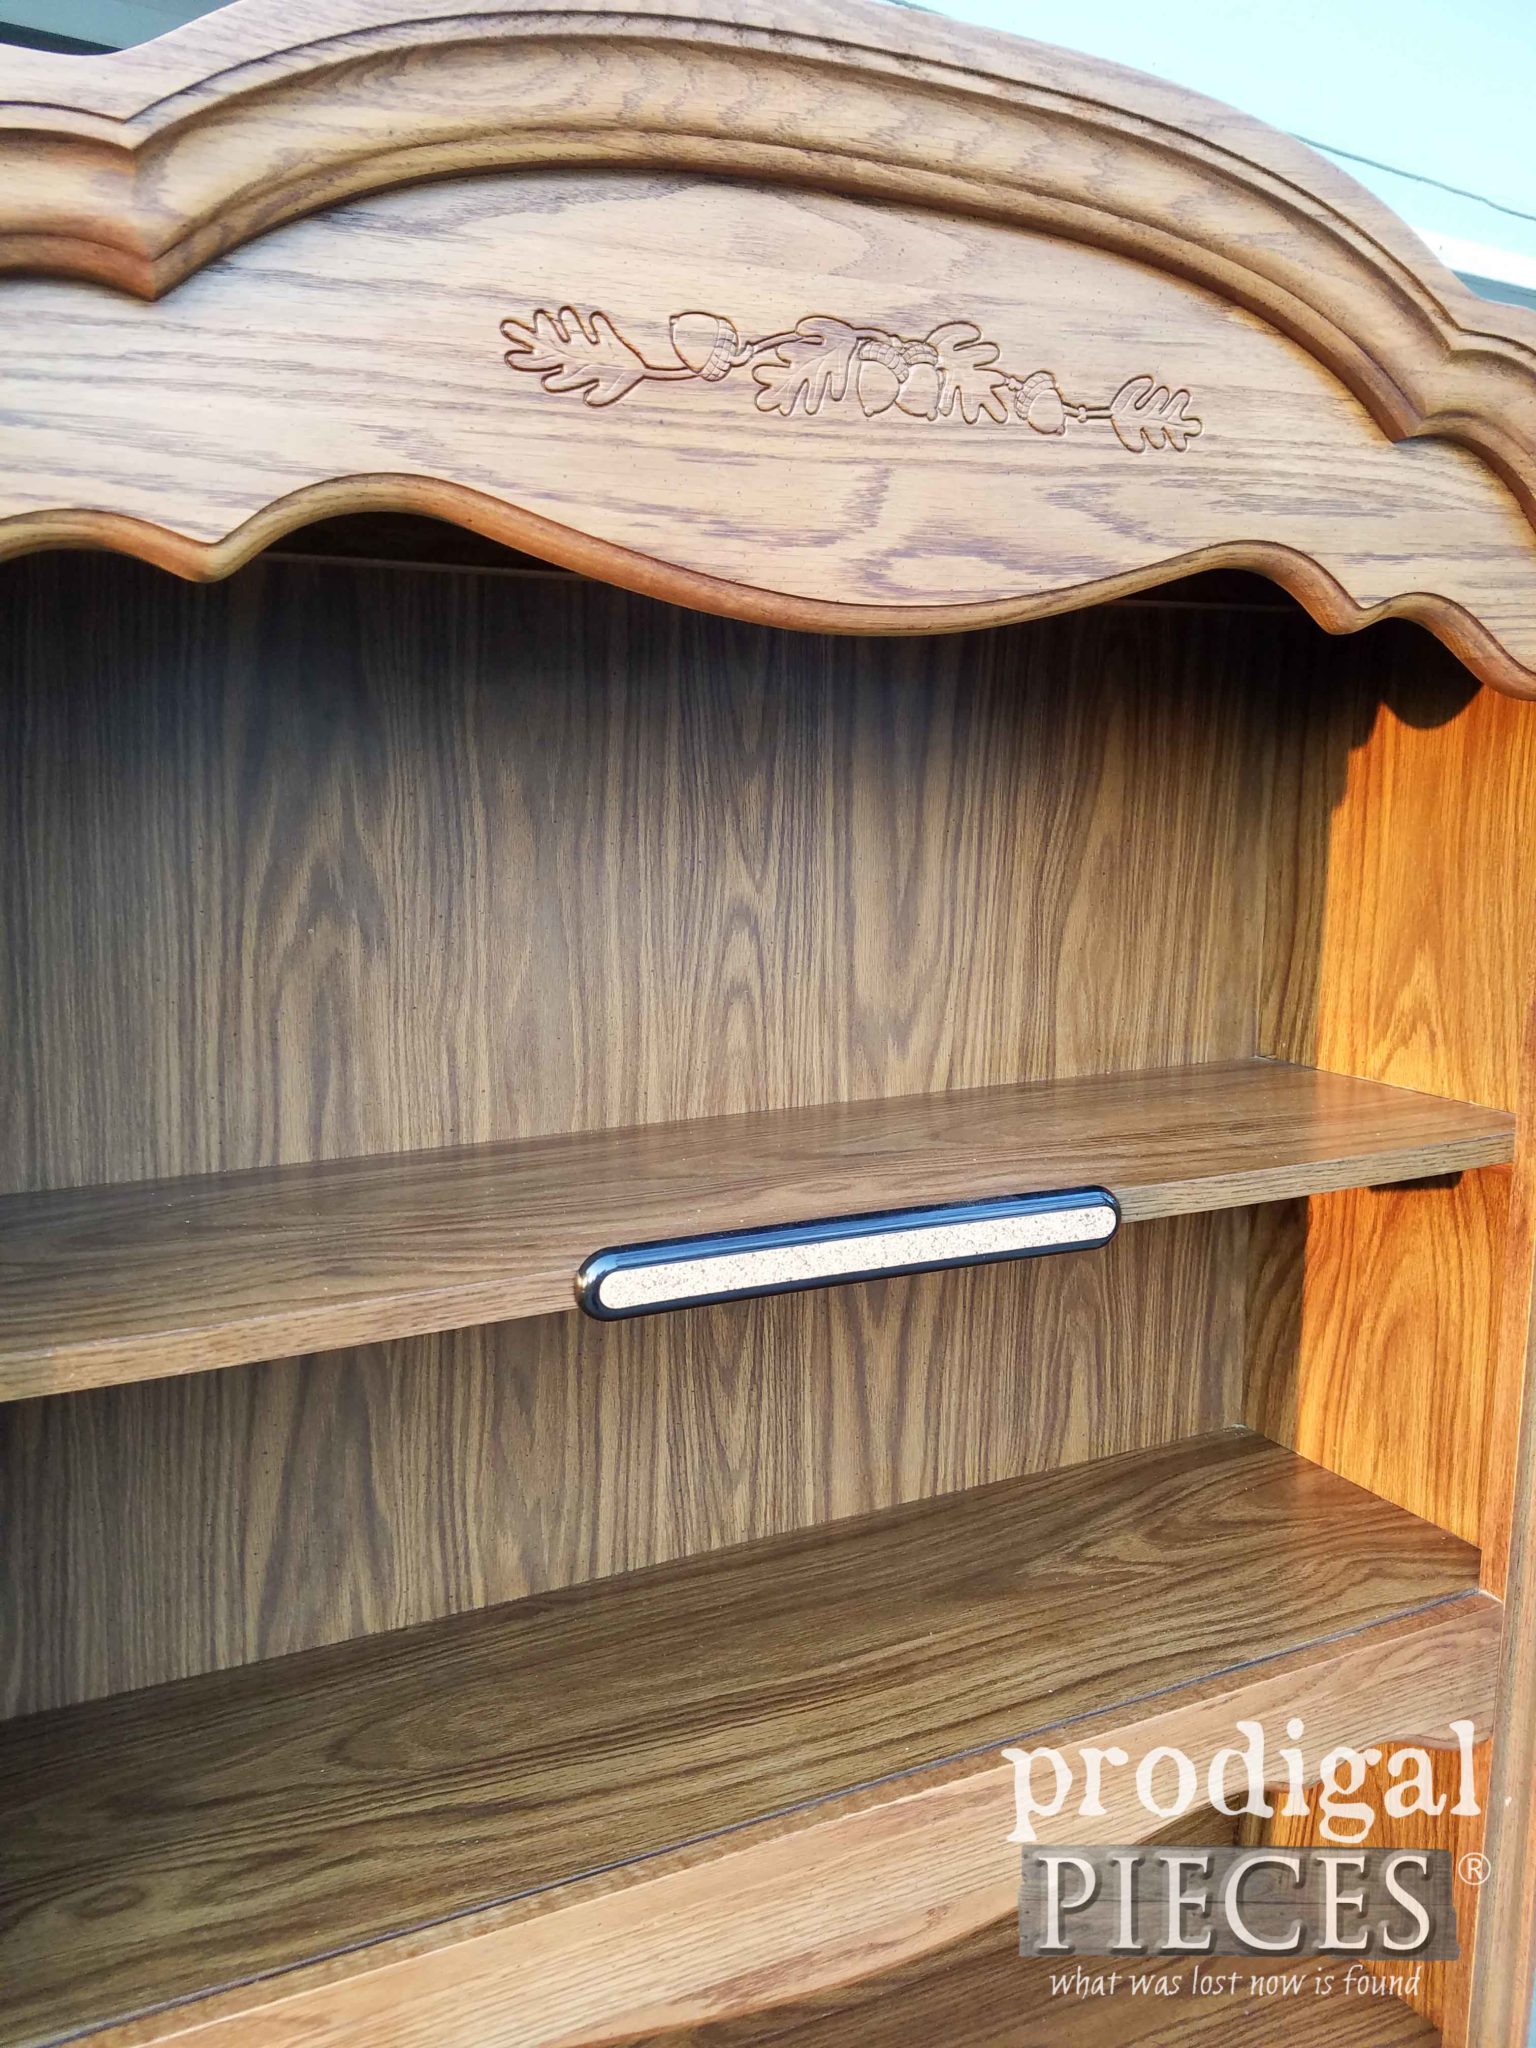 Brohill Hutch Desk Top with Acorn Design | prodigalpieces.com